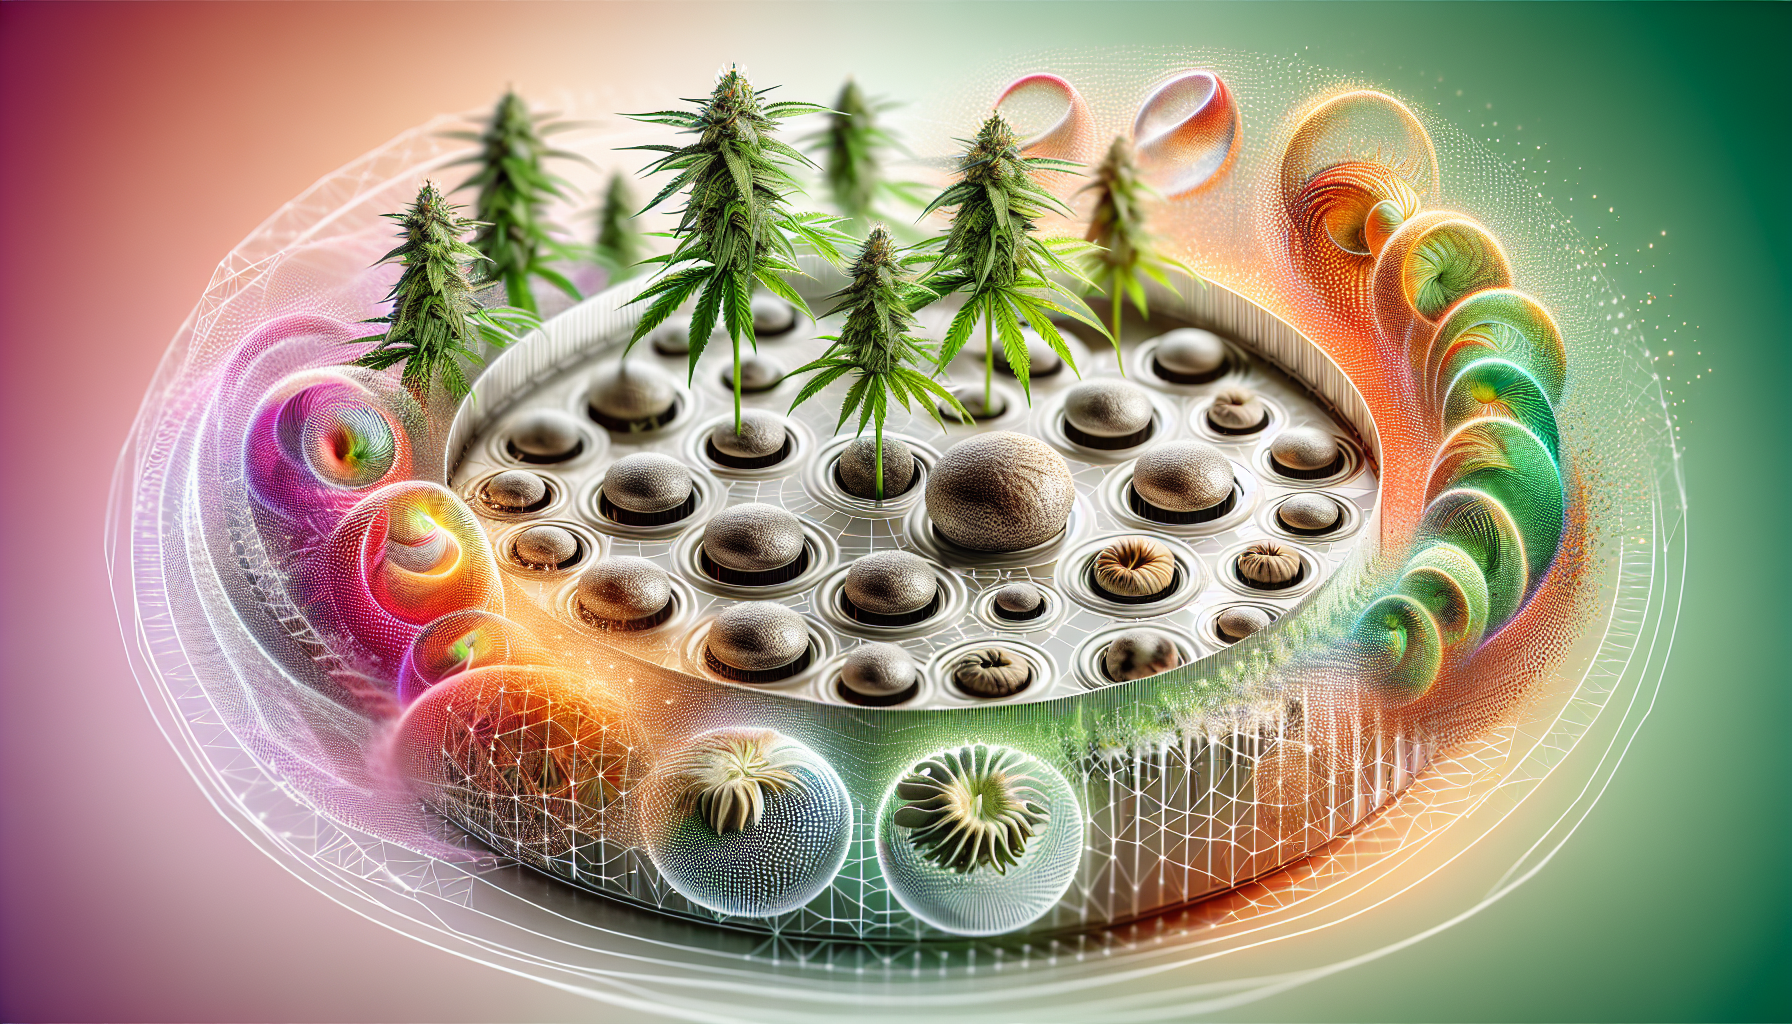 Illustration of auto-flowering cannabis seeds